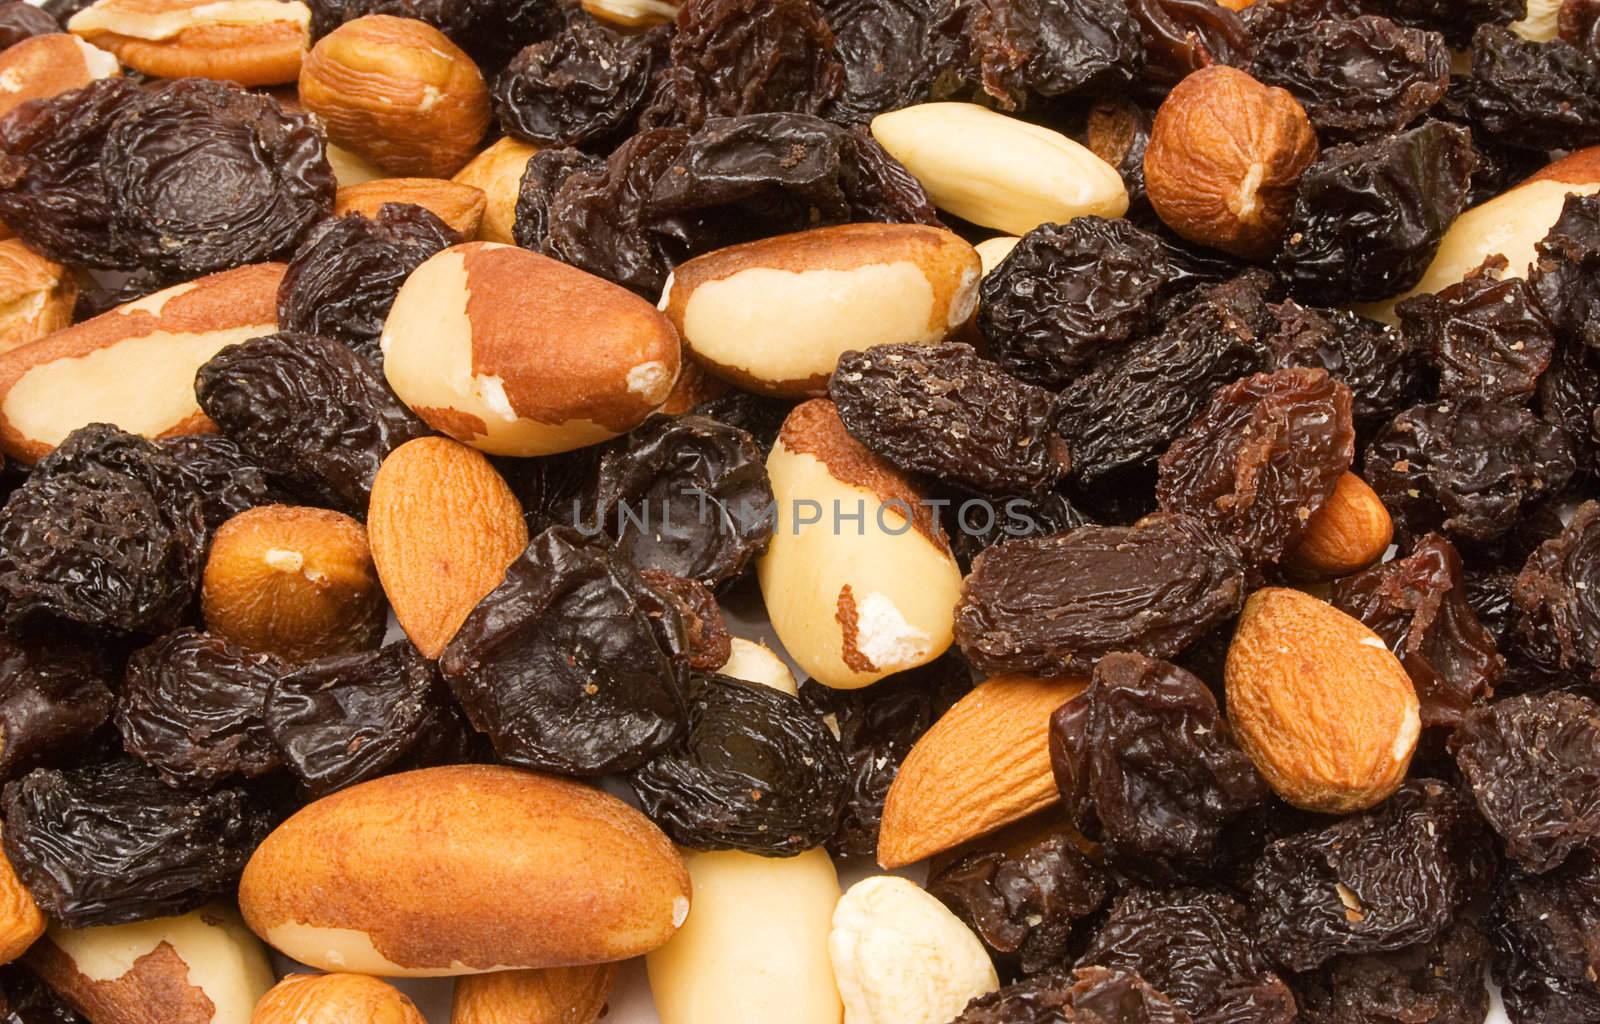 Raisins and nuts.